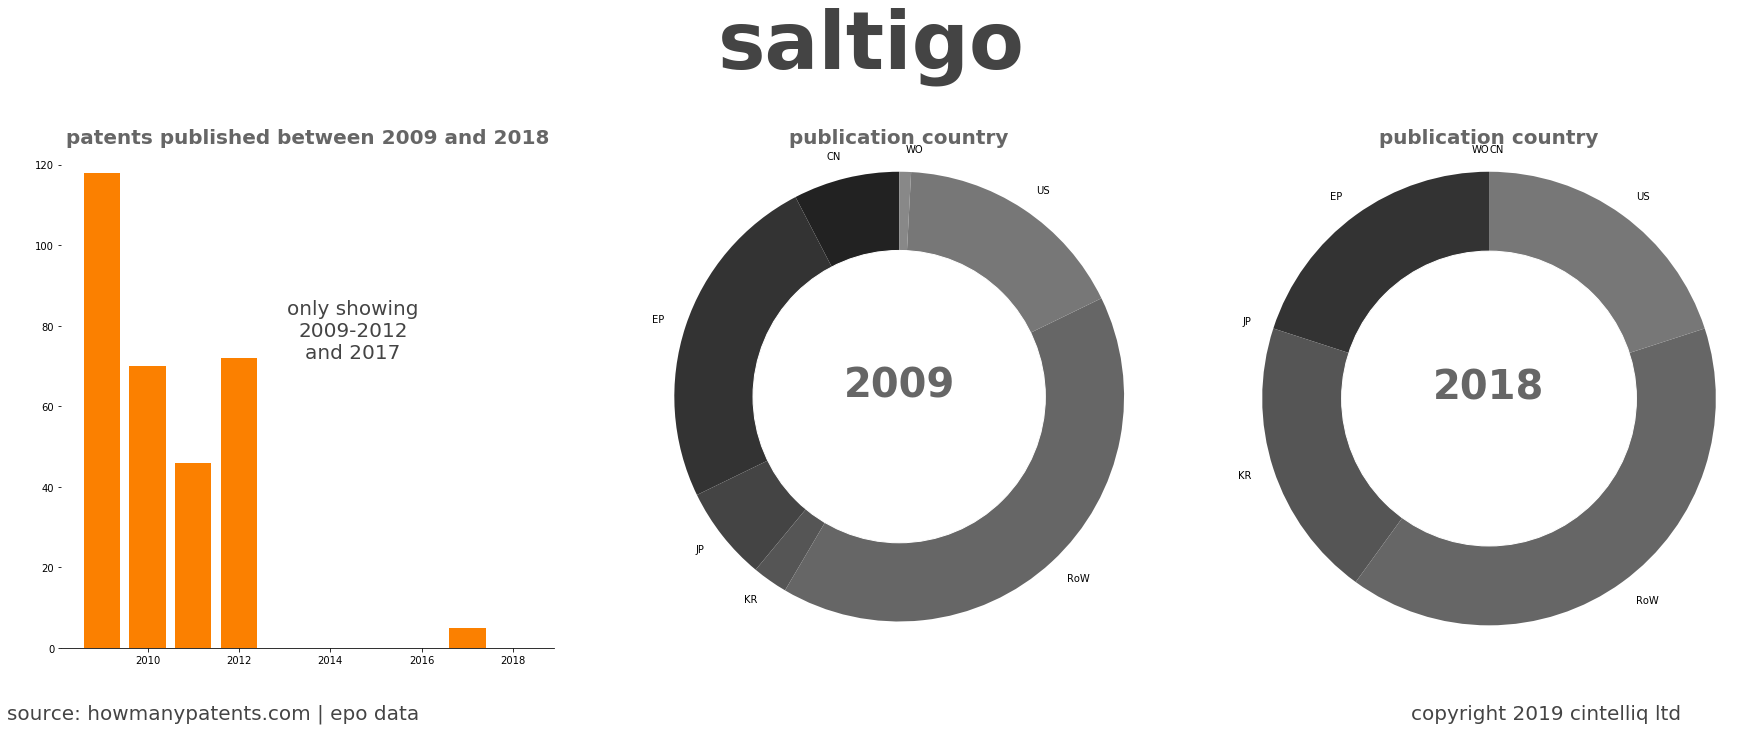 summary of patents for Saltigo